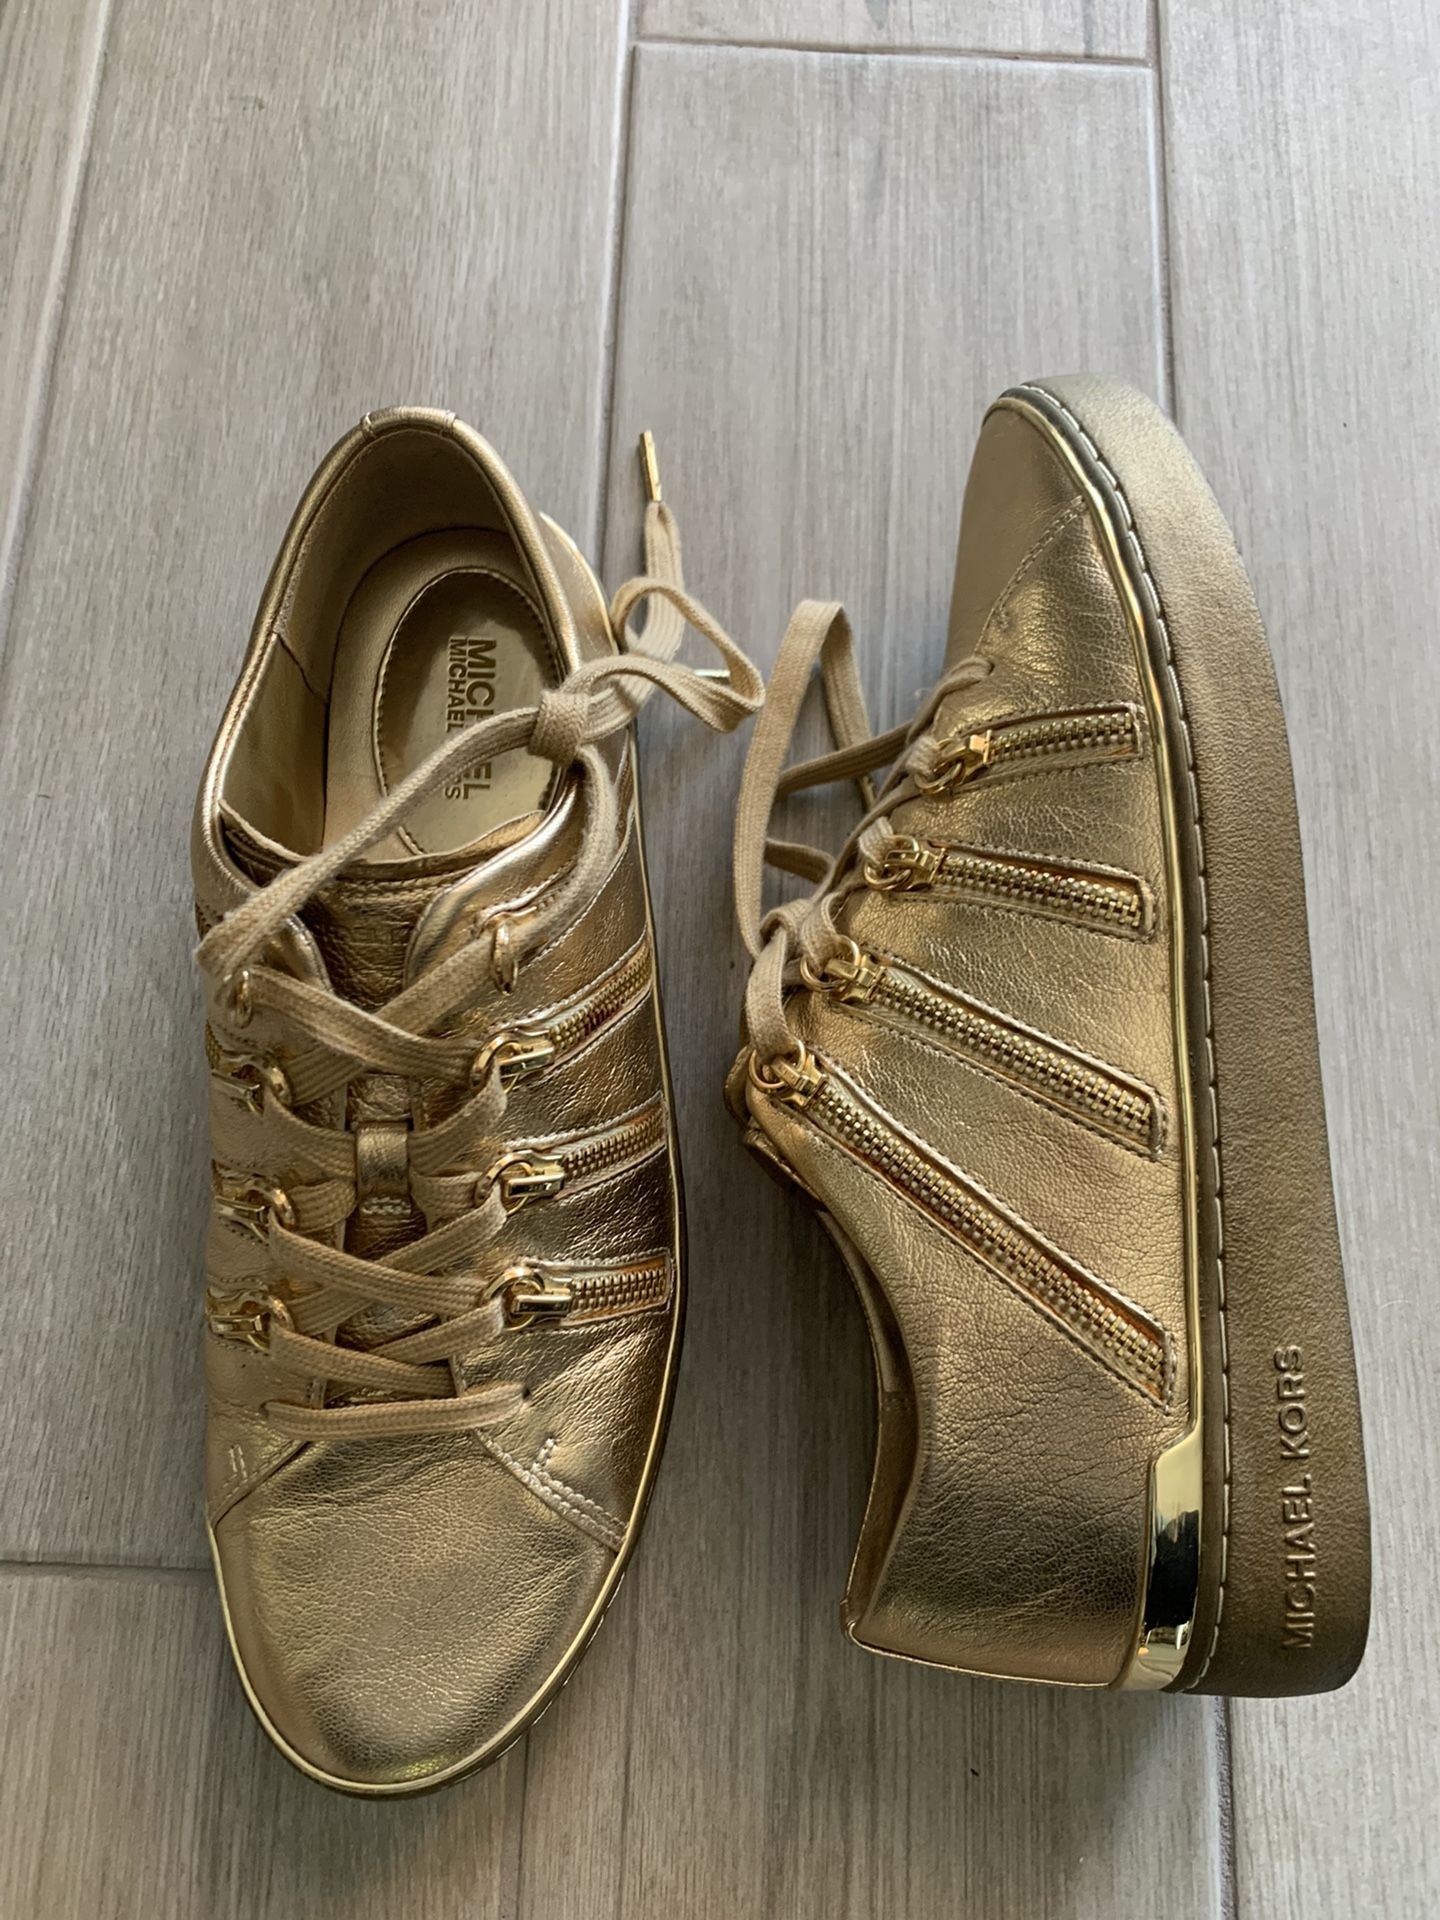 Michael Kors Gold Shoes Size 9,5